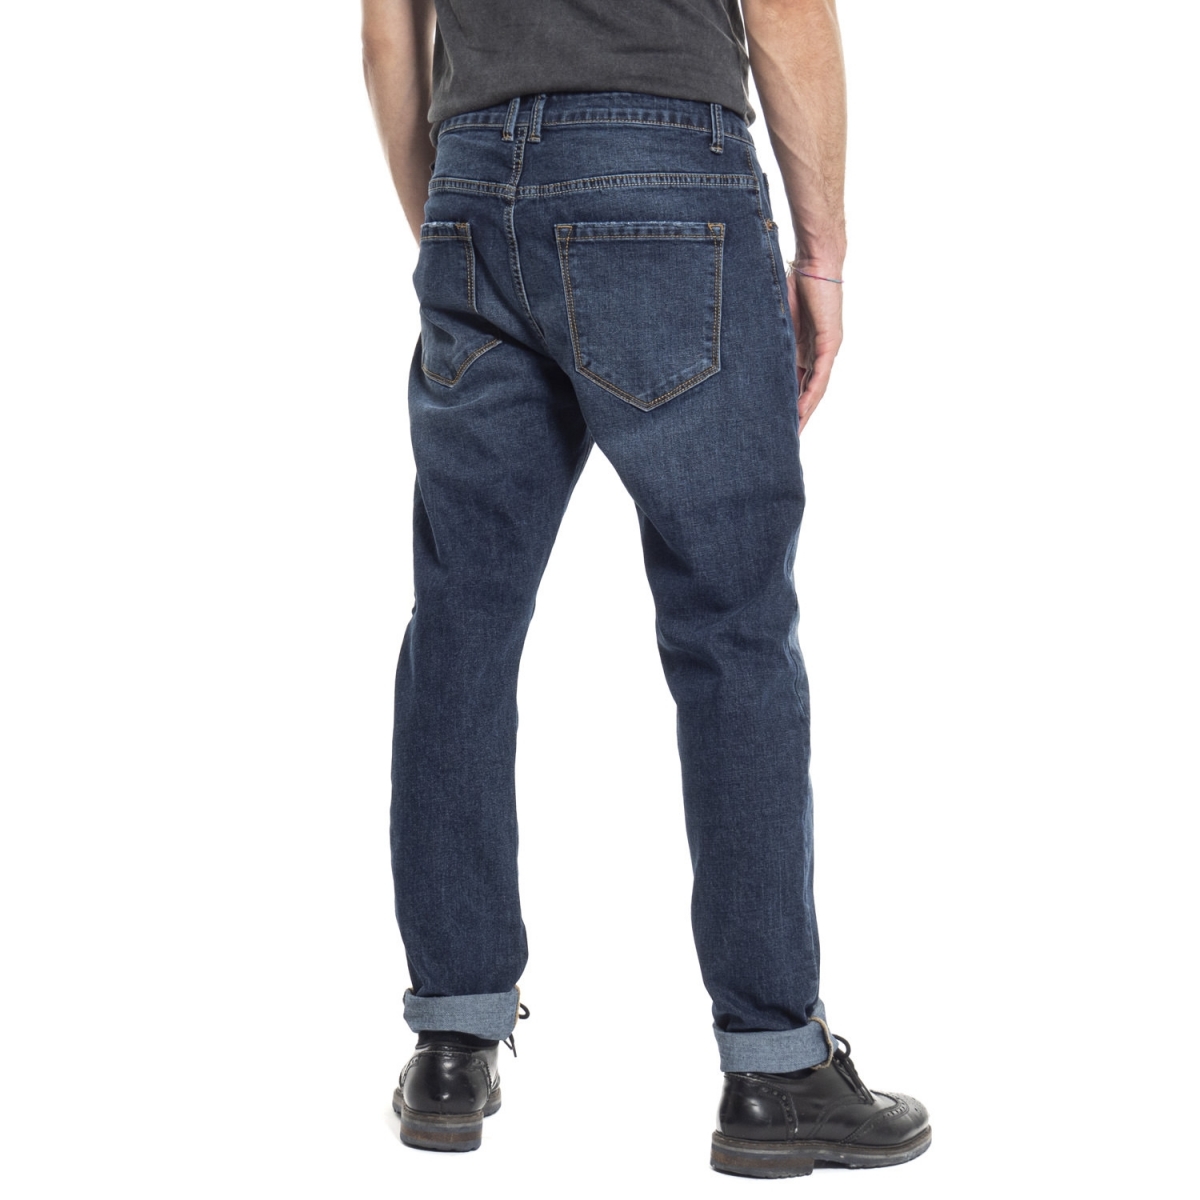 Kleidung Jeans mann Jeans ATM1088-7 LANDEK PARK Cafedelmar Shop